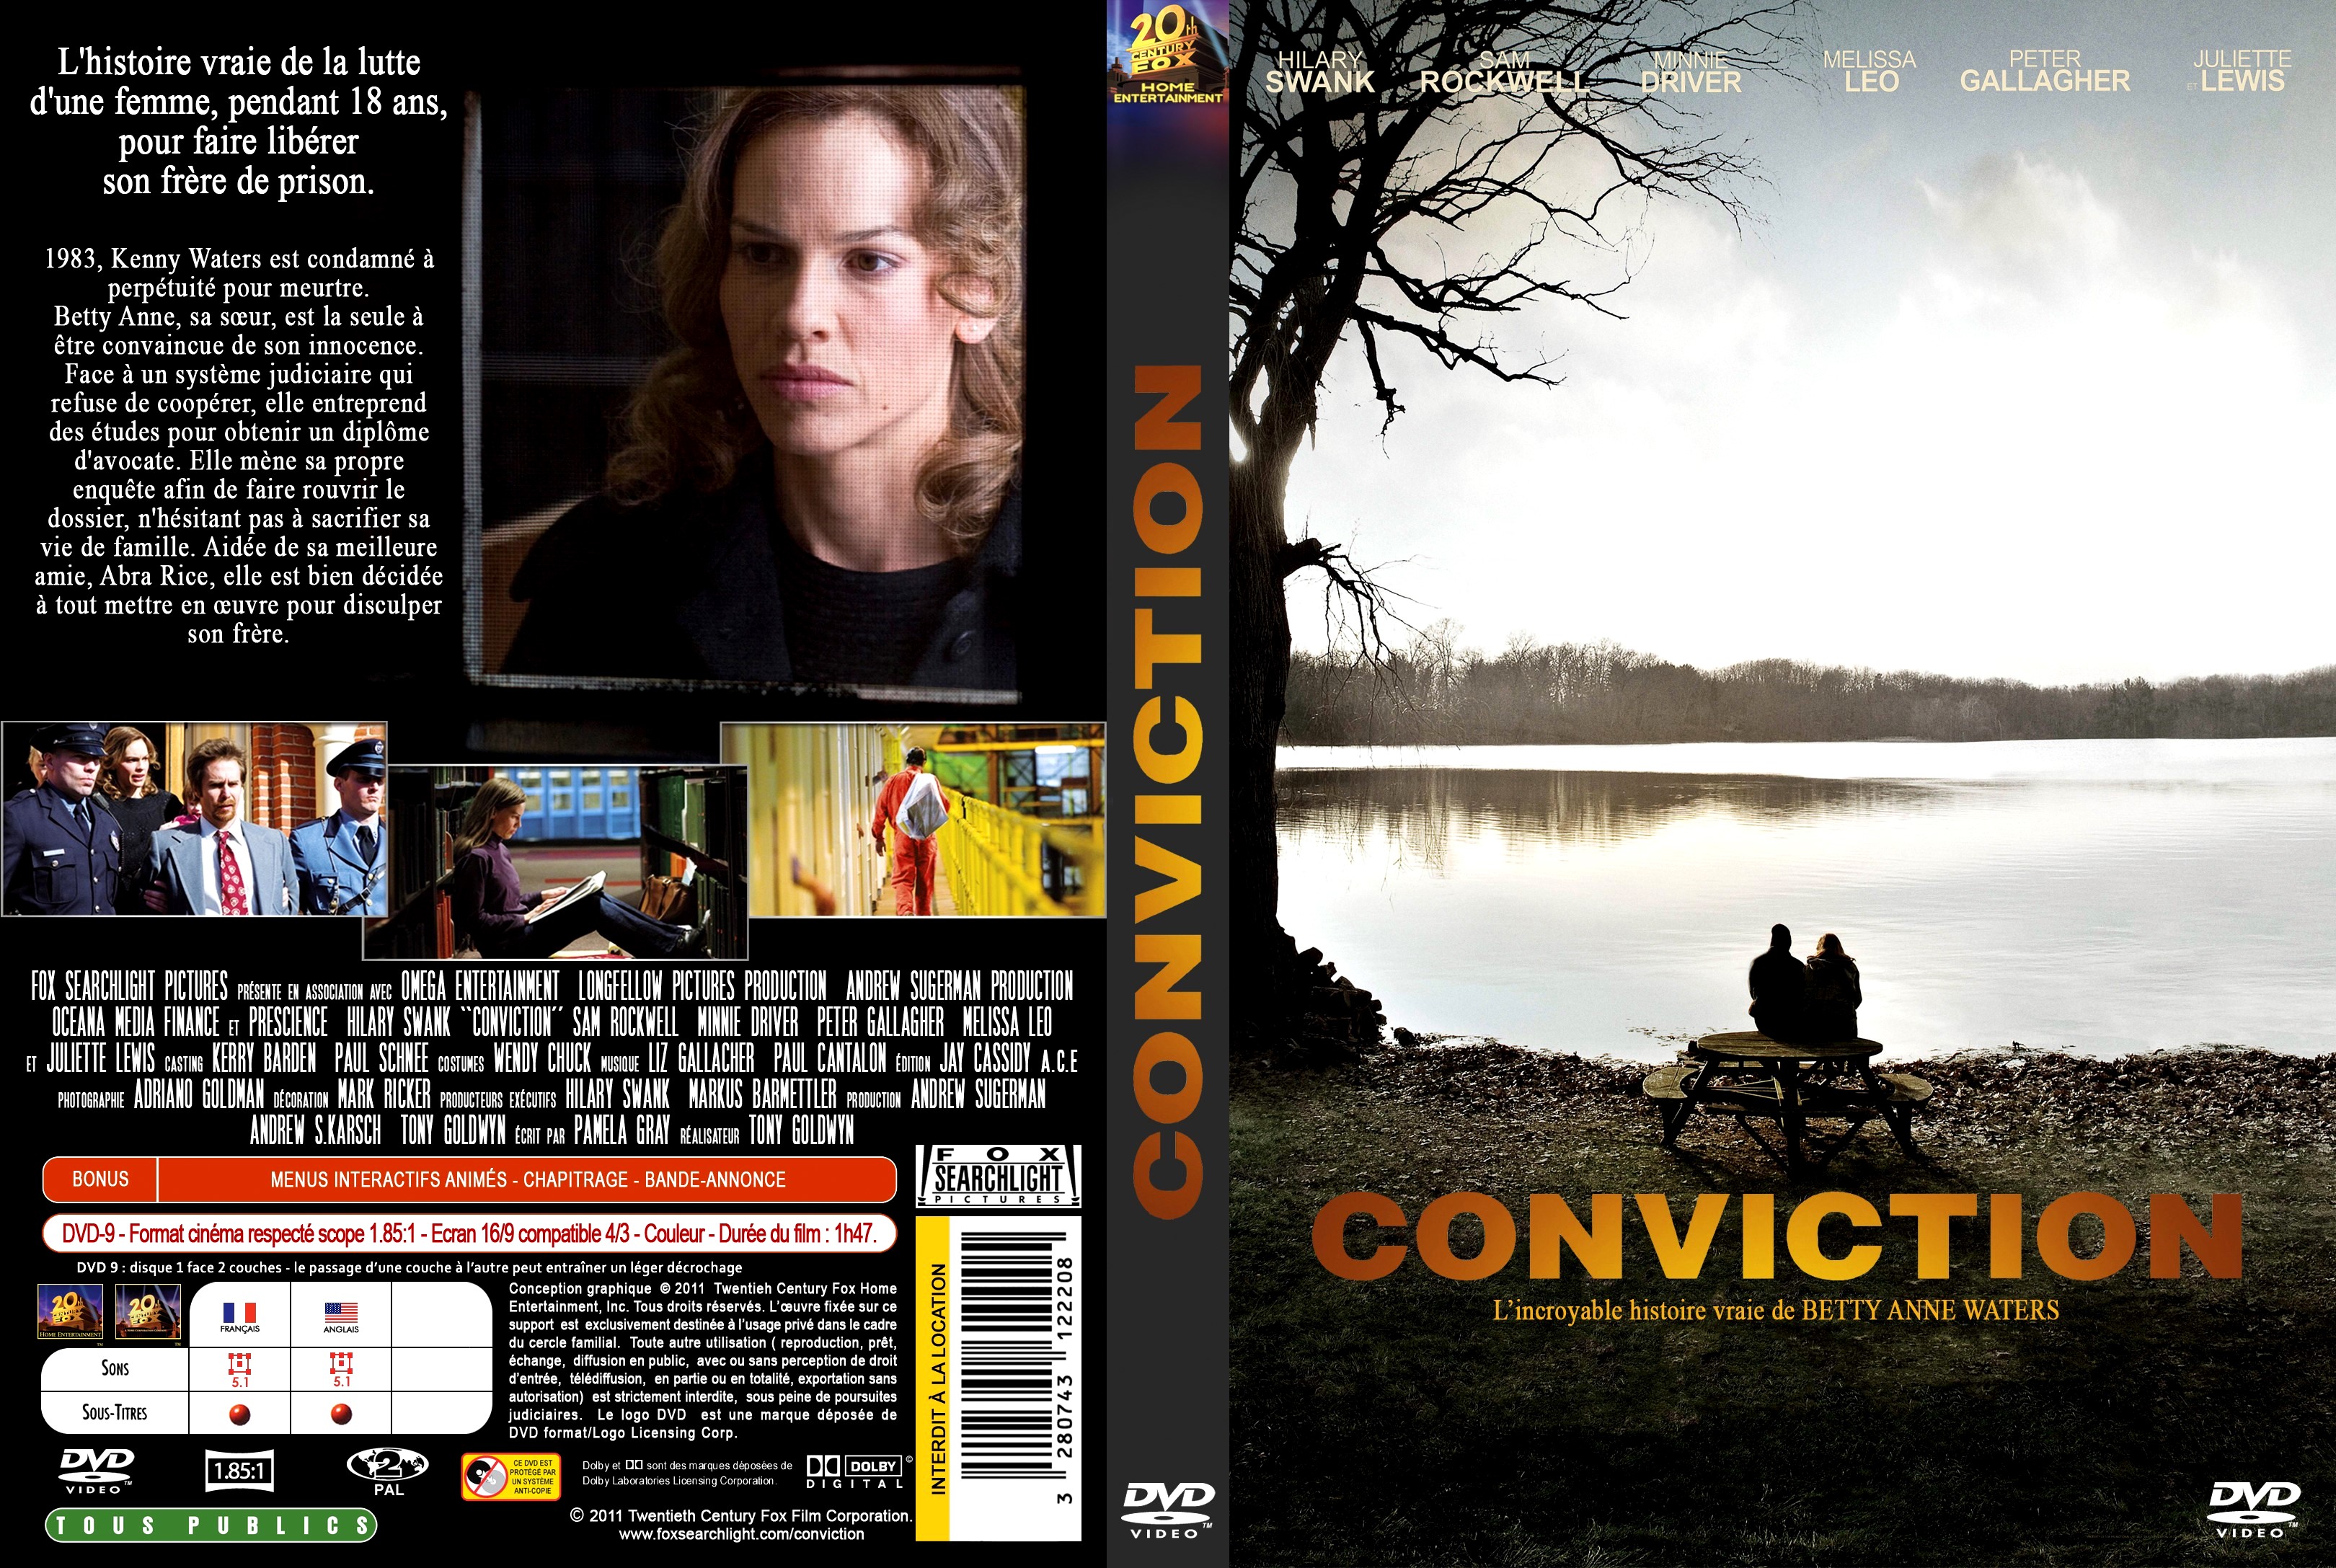 Jaquette DVD Conviction custom